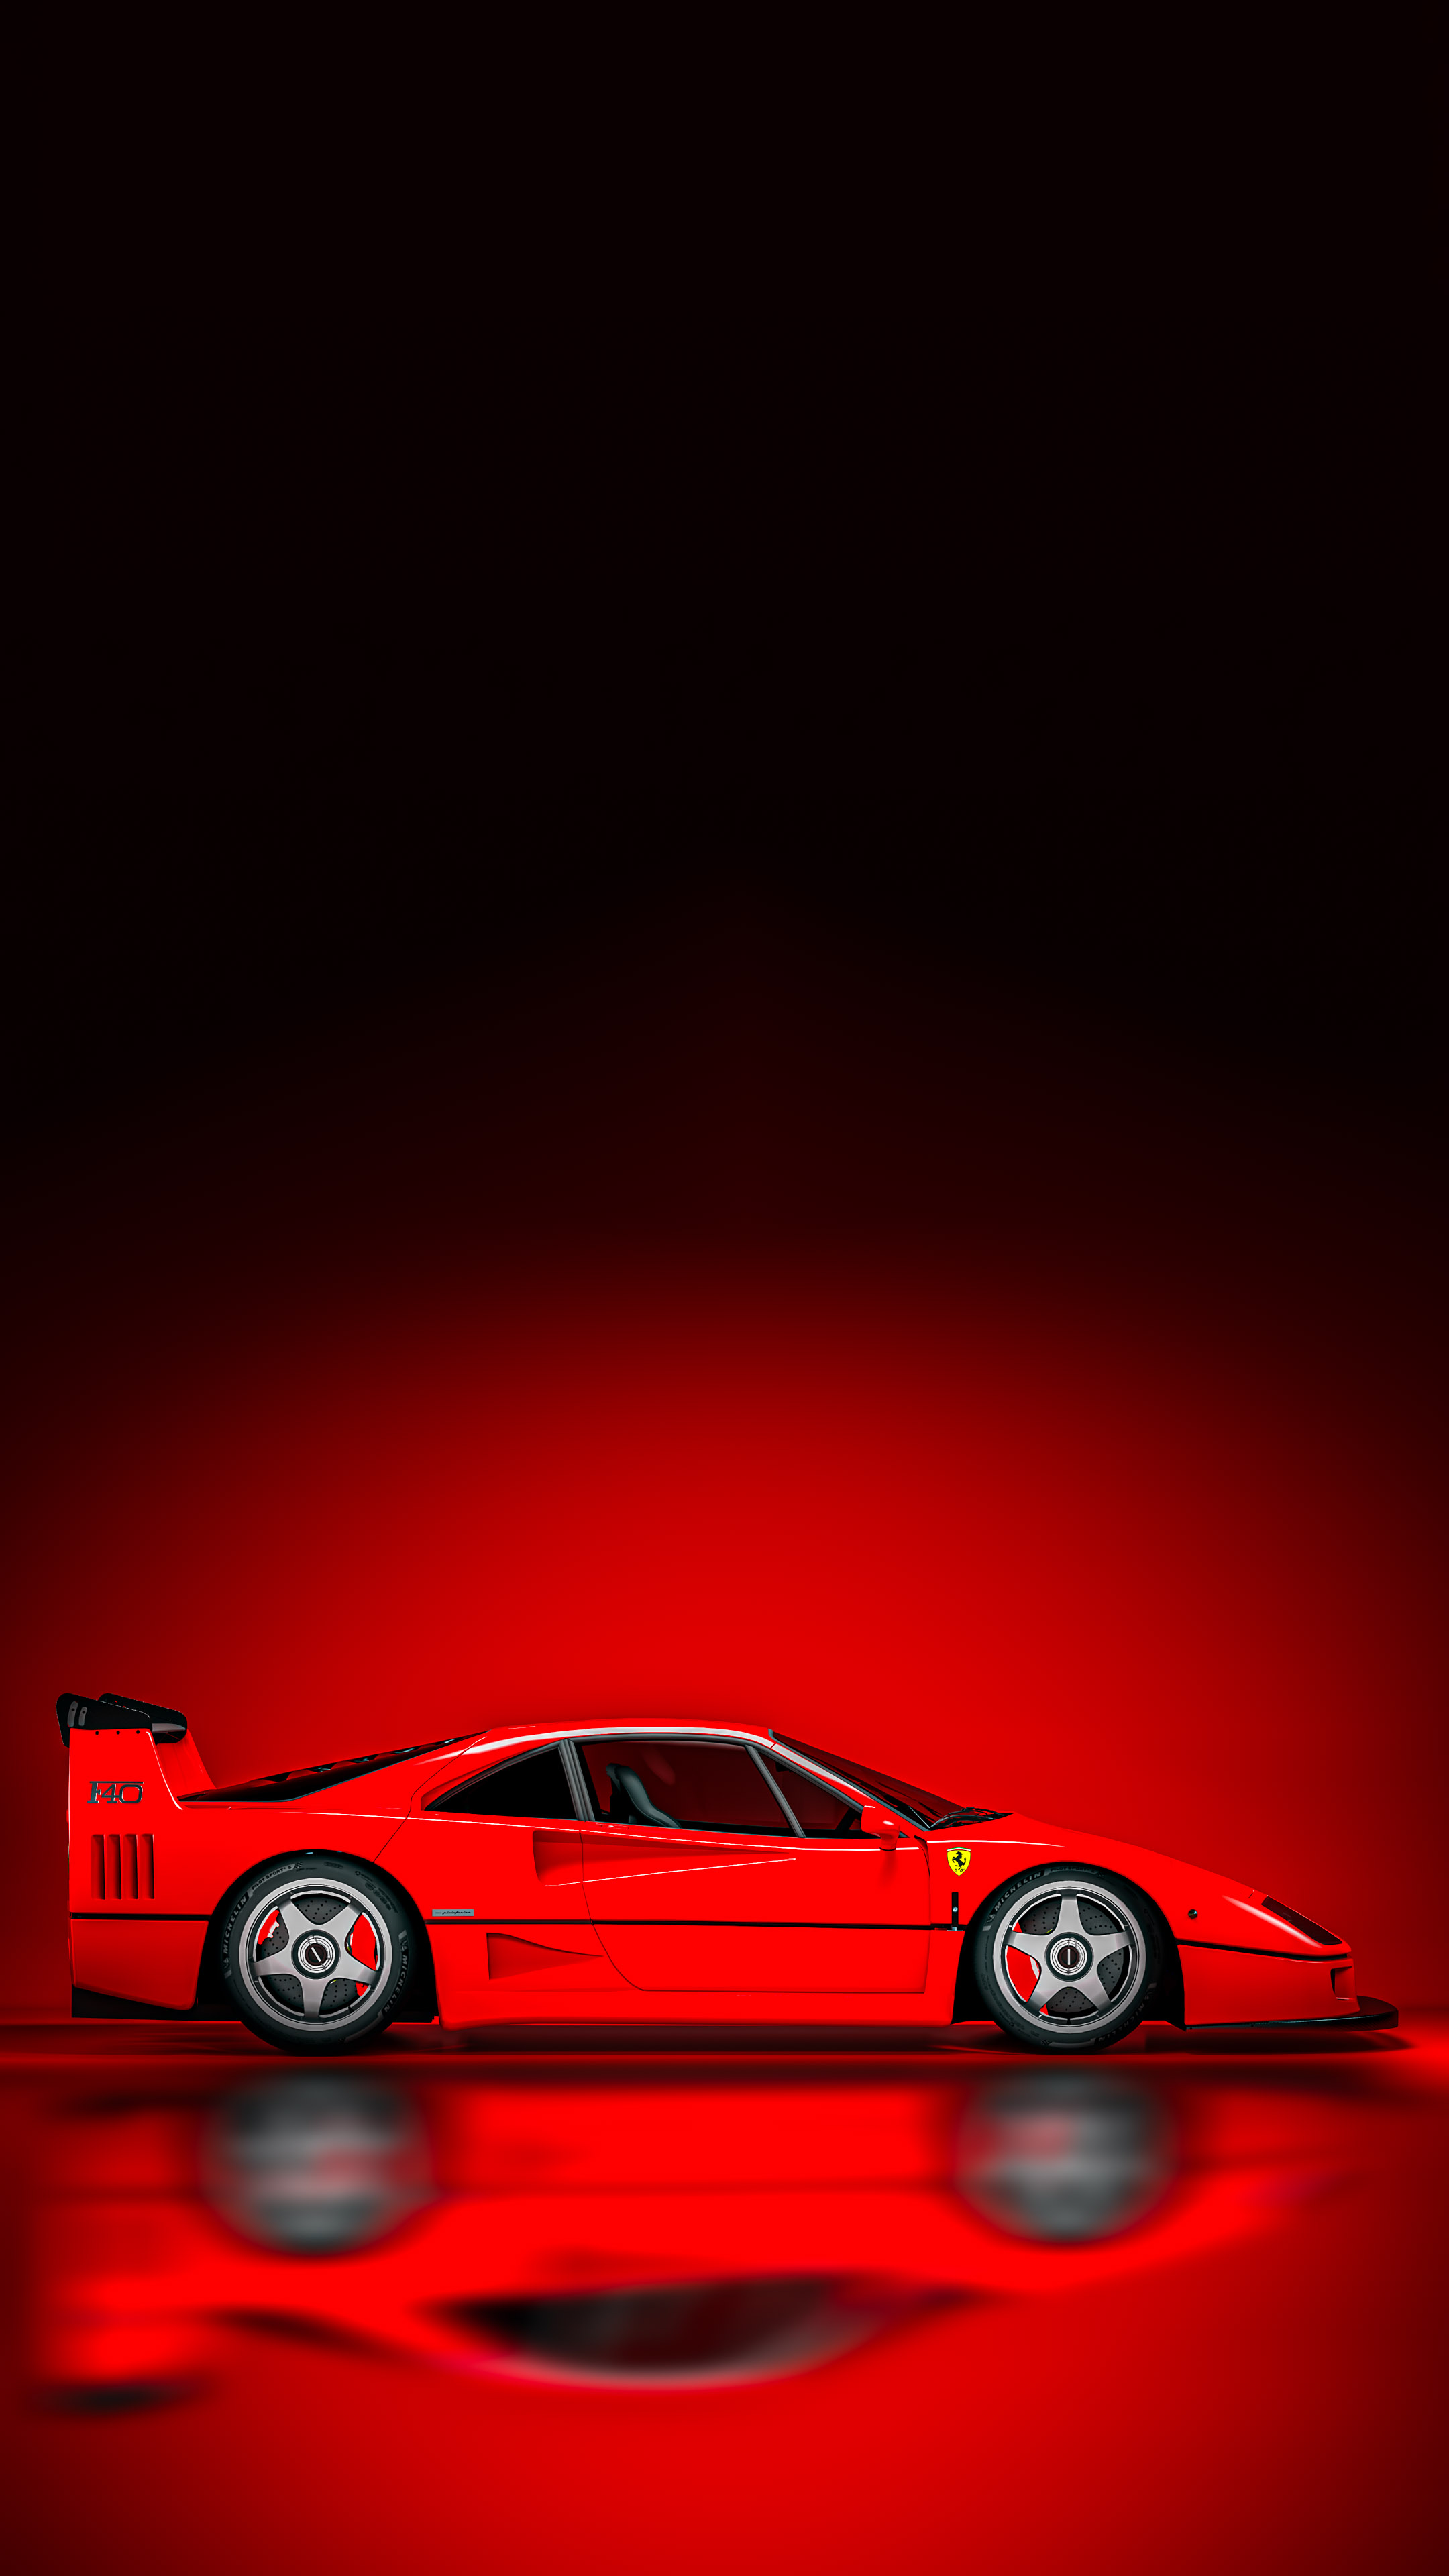 cool car wallpapers of Ferrari F40 classic